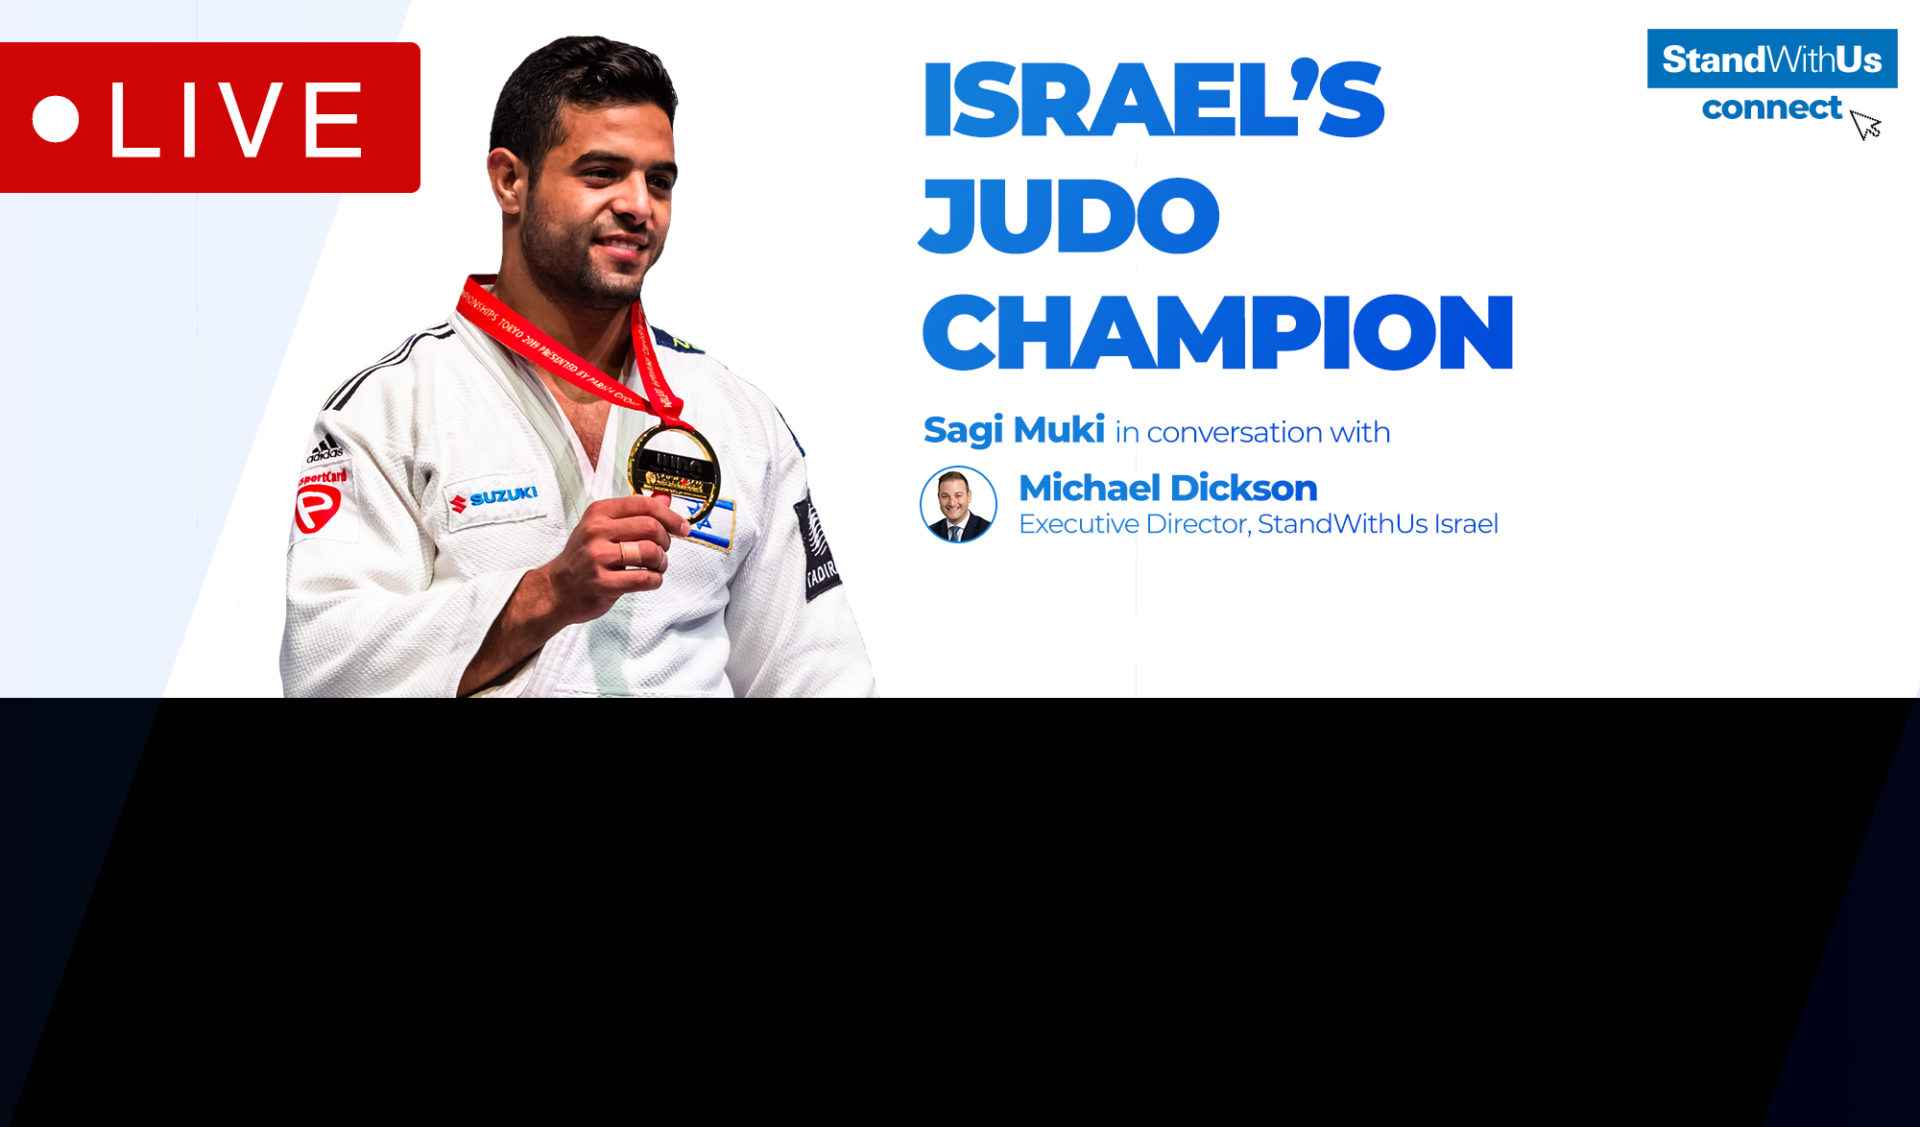 Israel’s Judo Champion